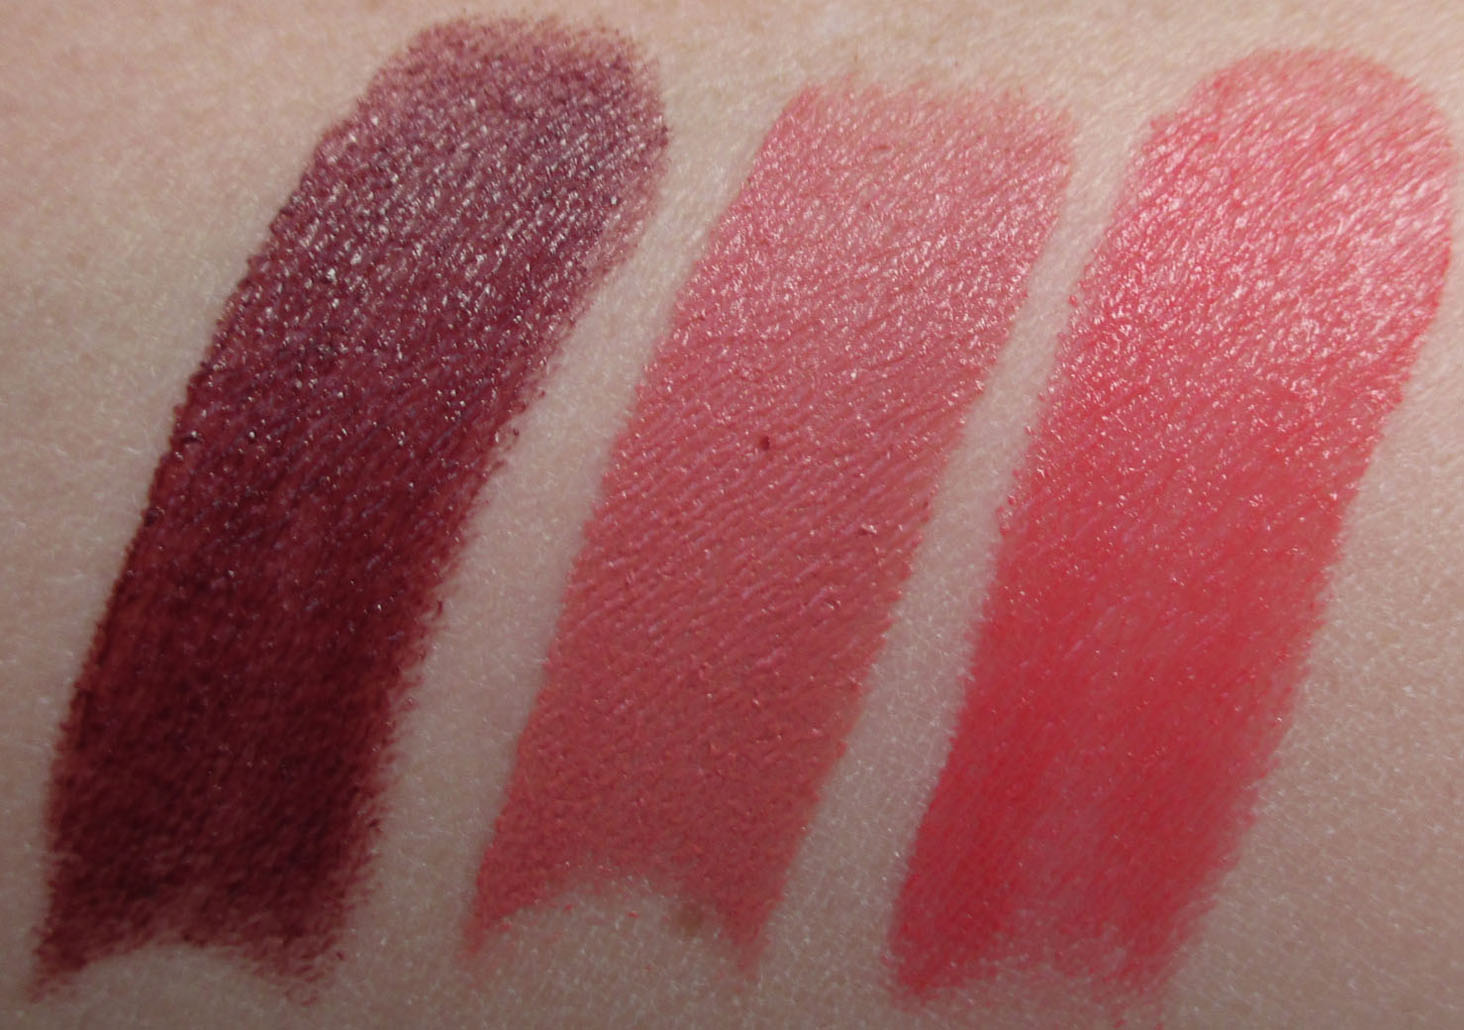 Avon Ultra Color Lipstick Swatches.